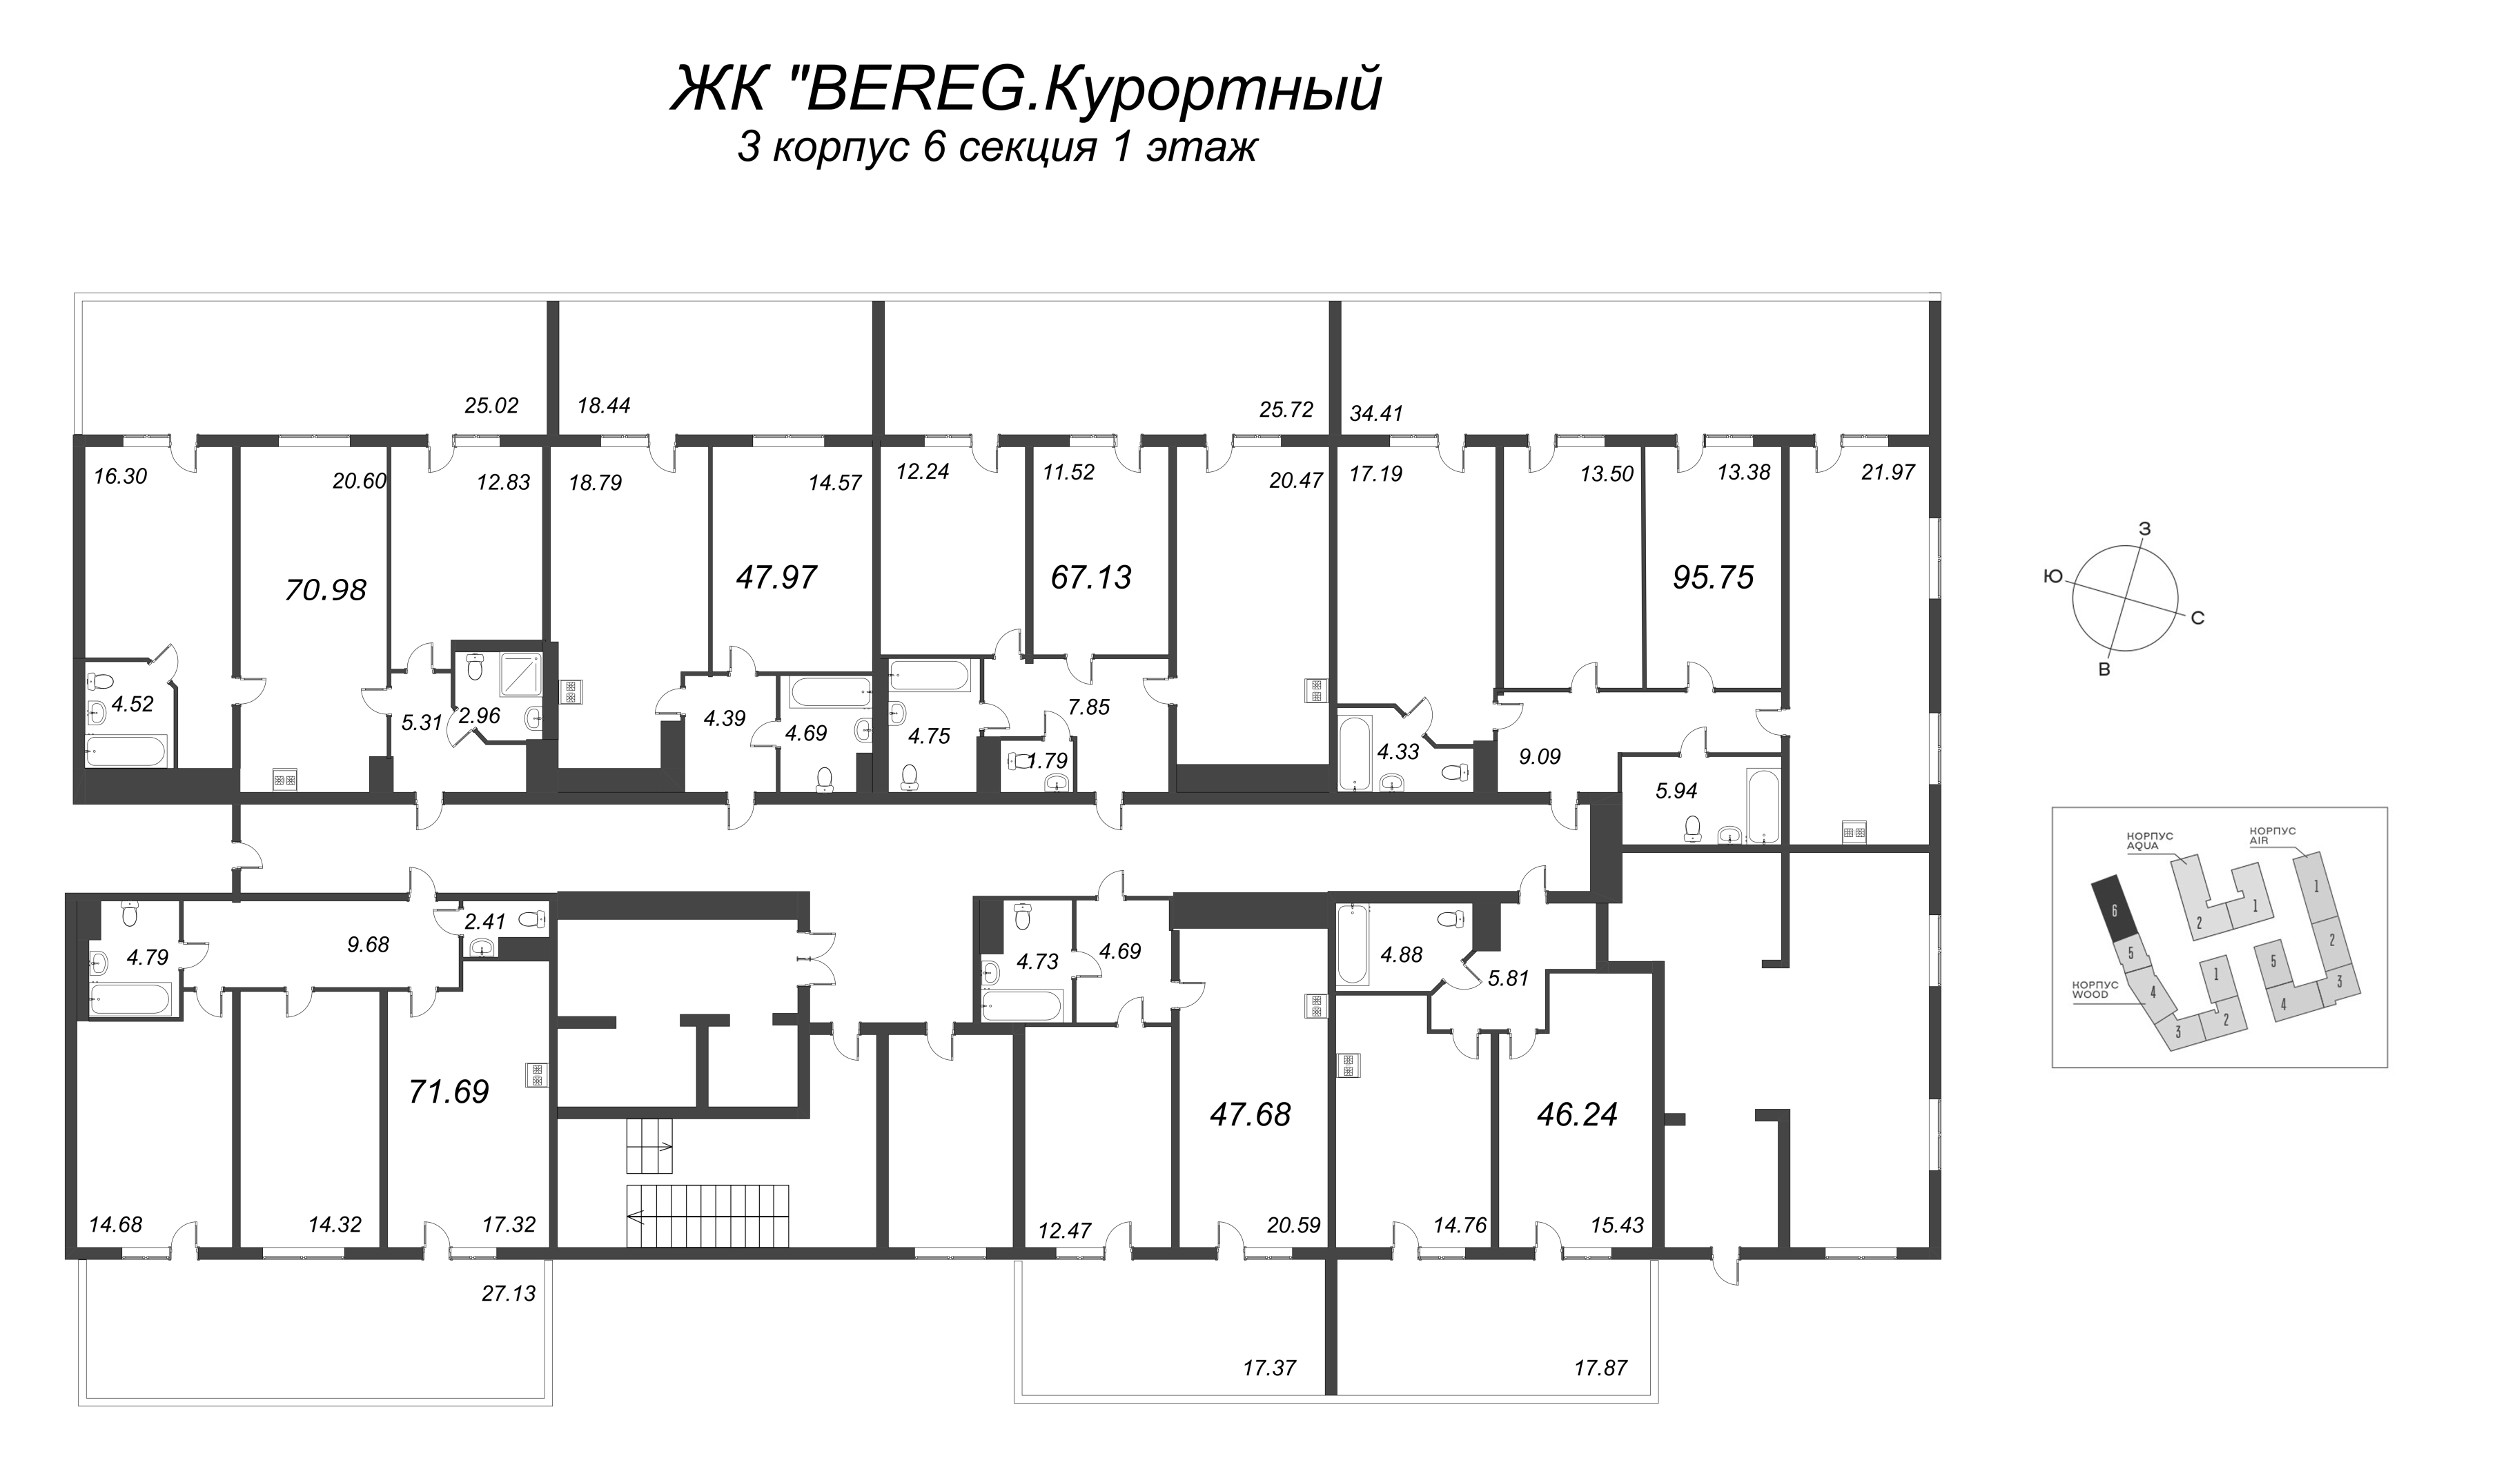 2-комнатная (Евро) квартира, 47.68 м² - планировка этажа